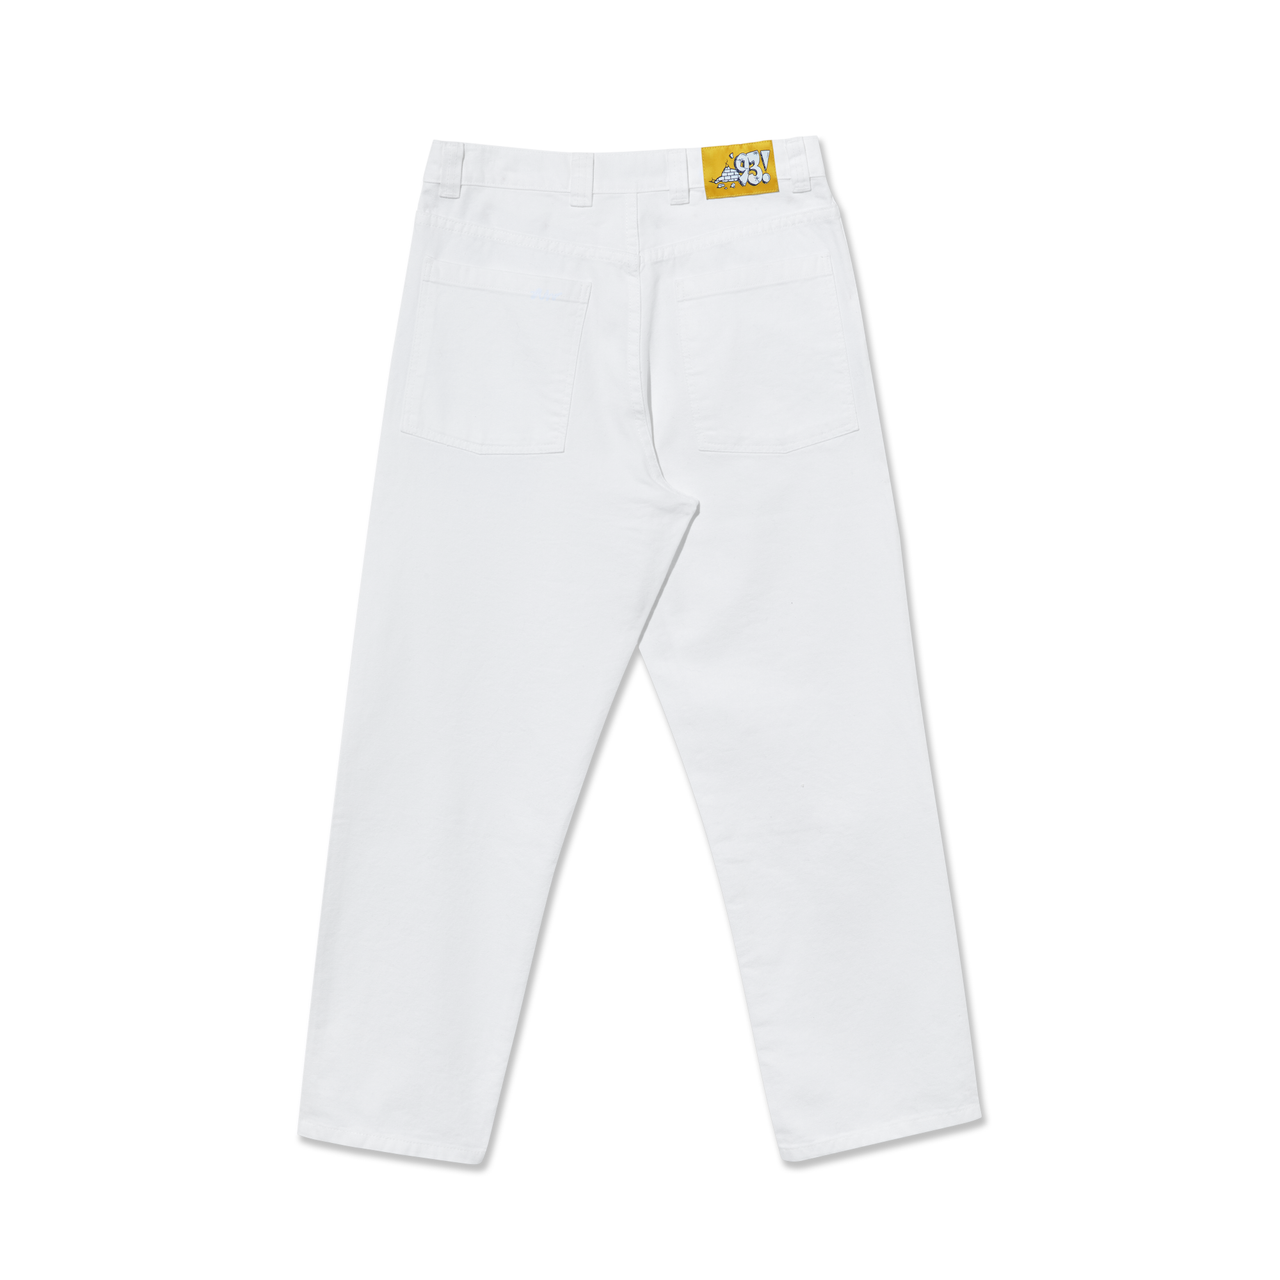 '93! Work Pants - White